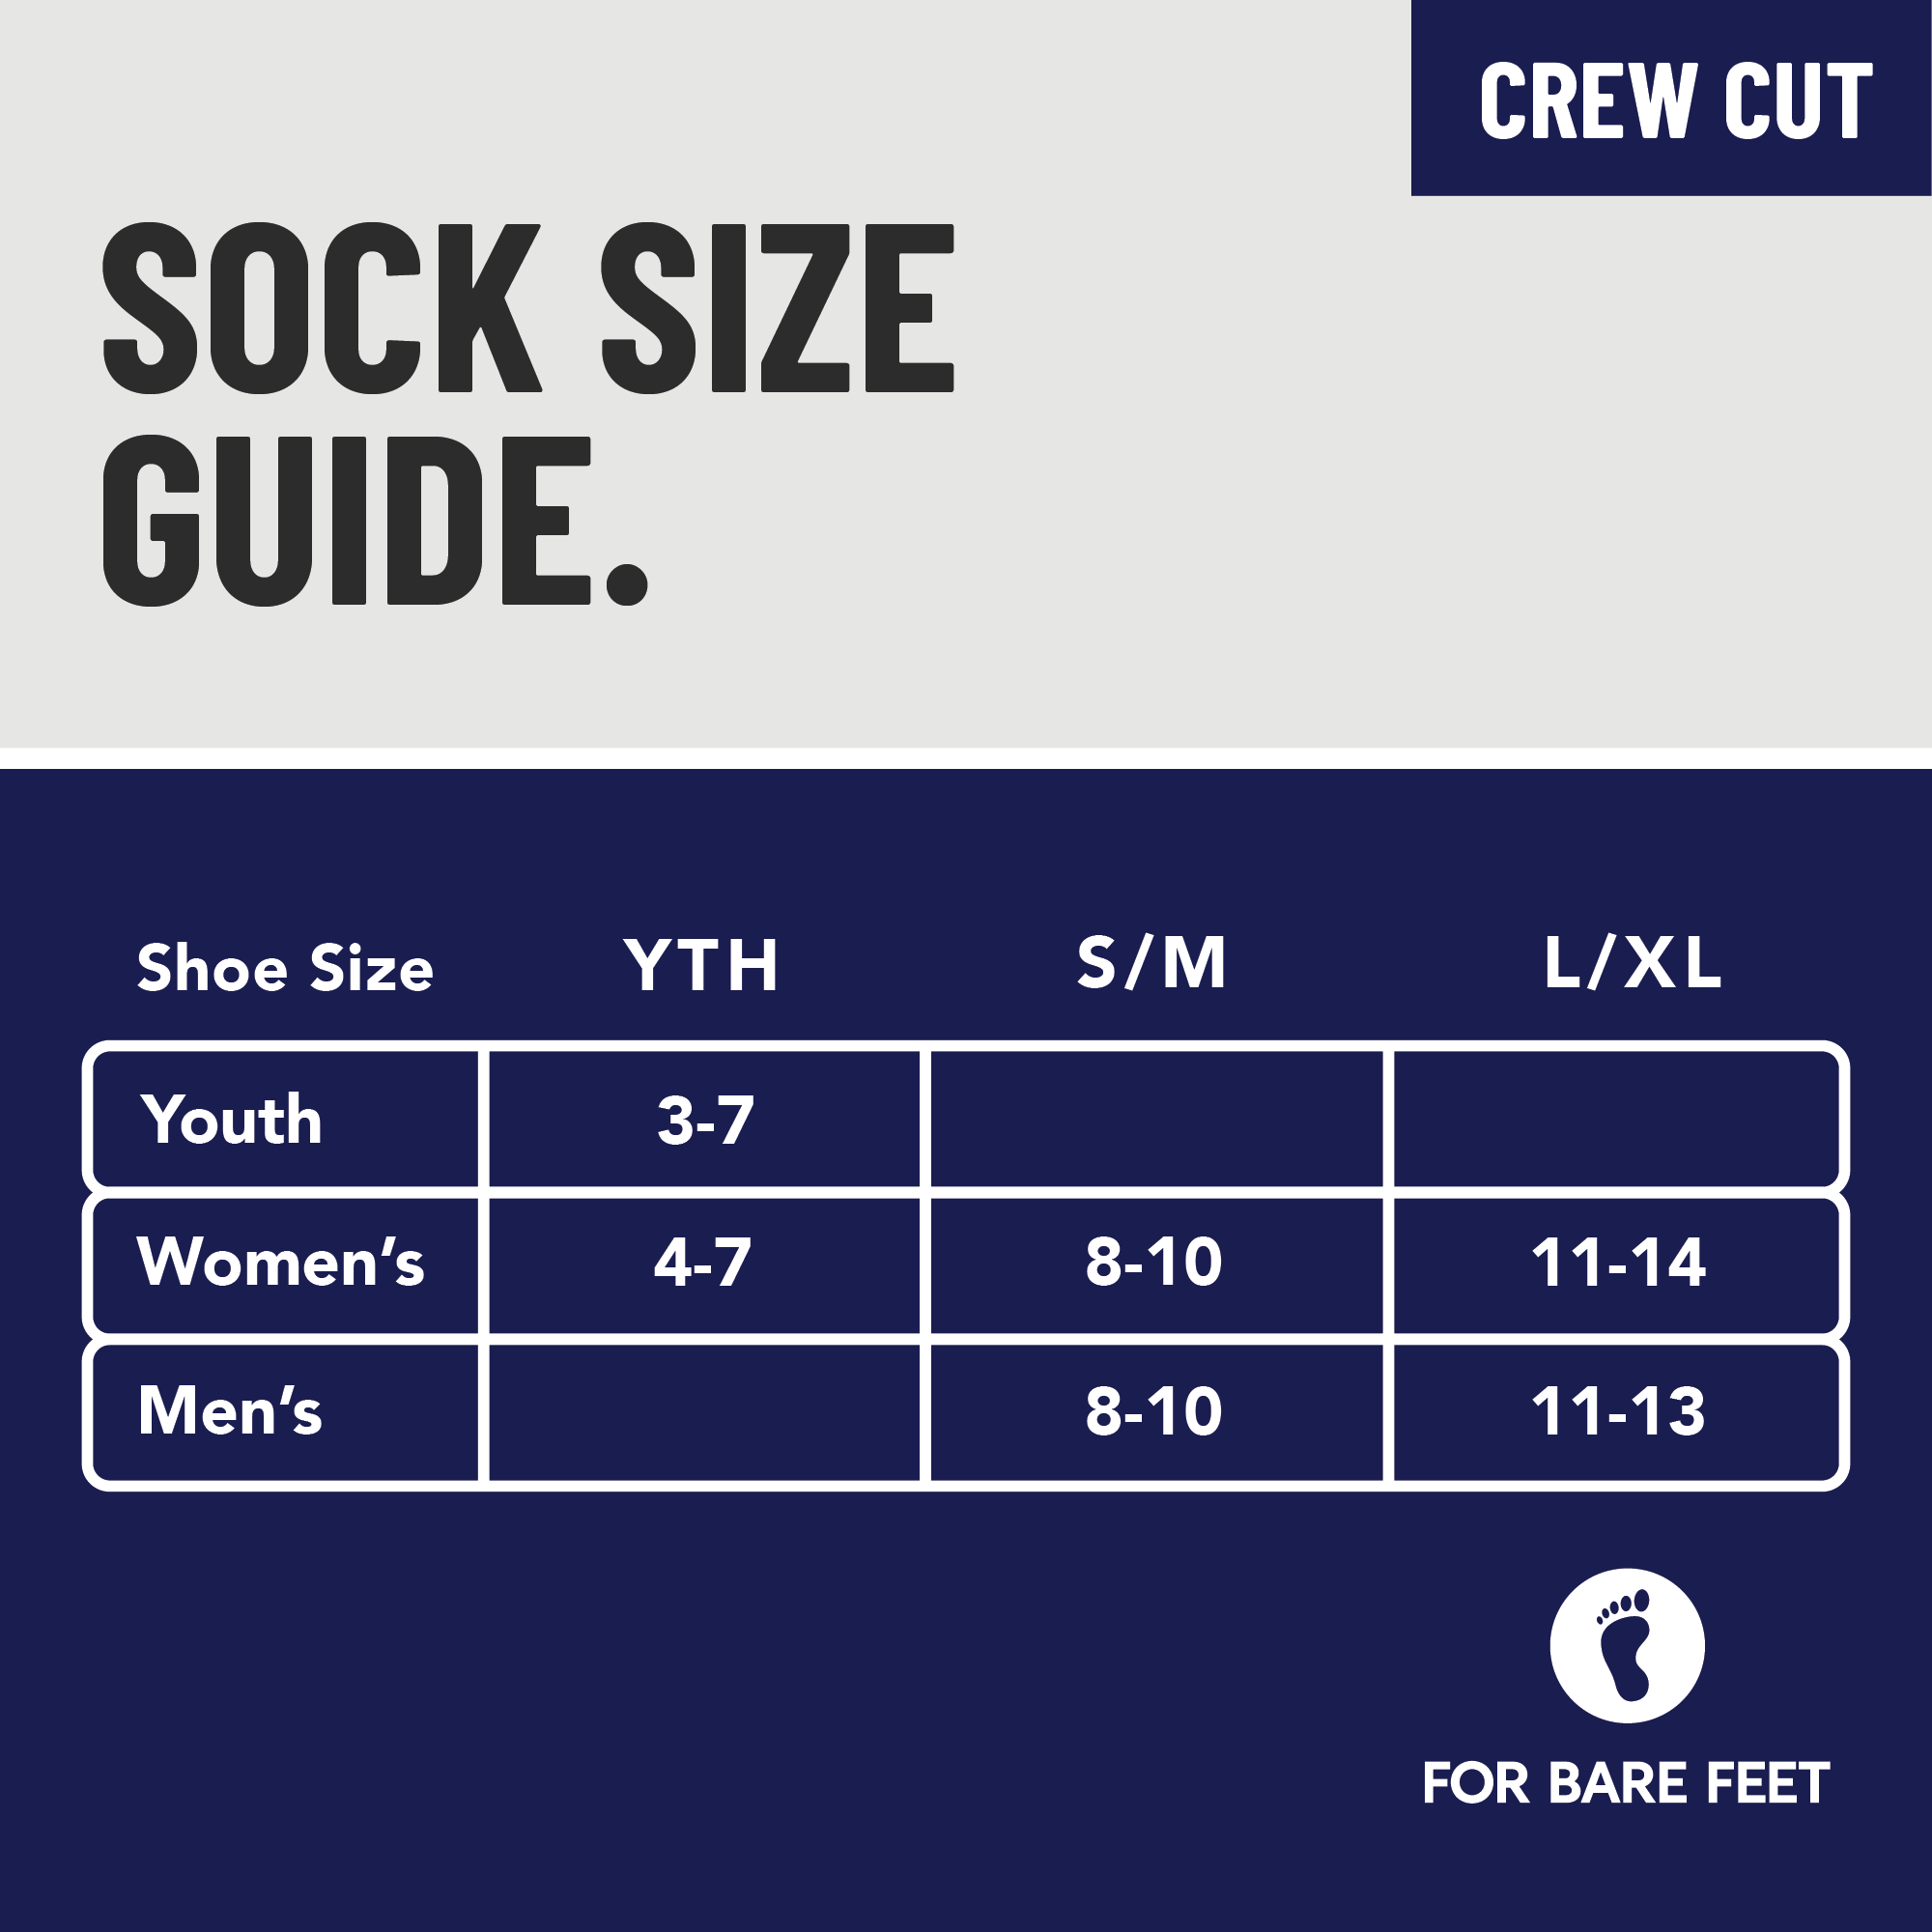 Minnesota Vikings Breakout Premium Crew Socks